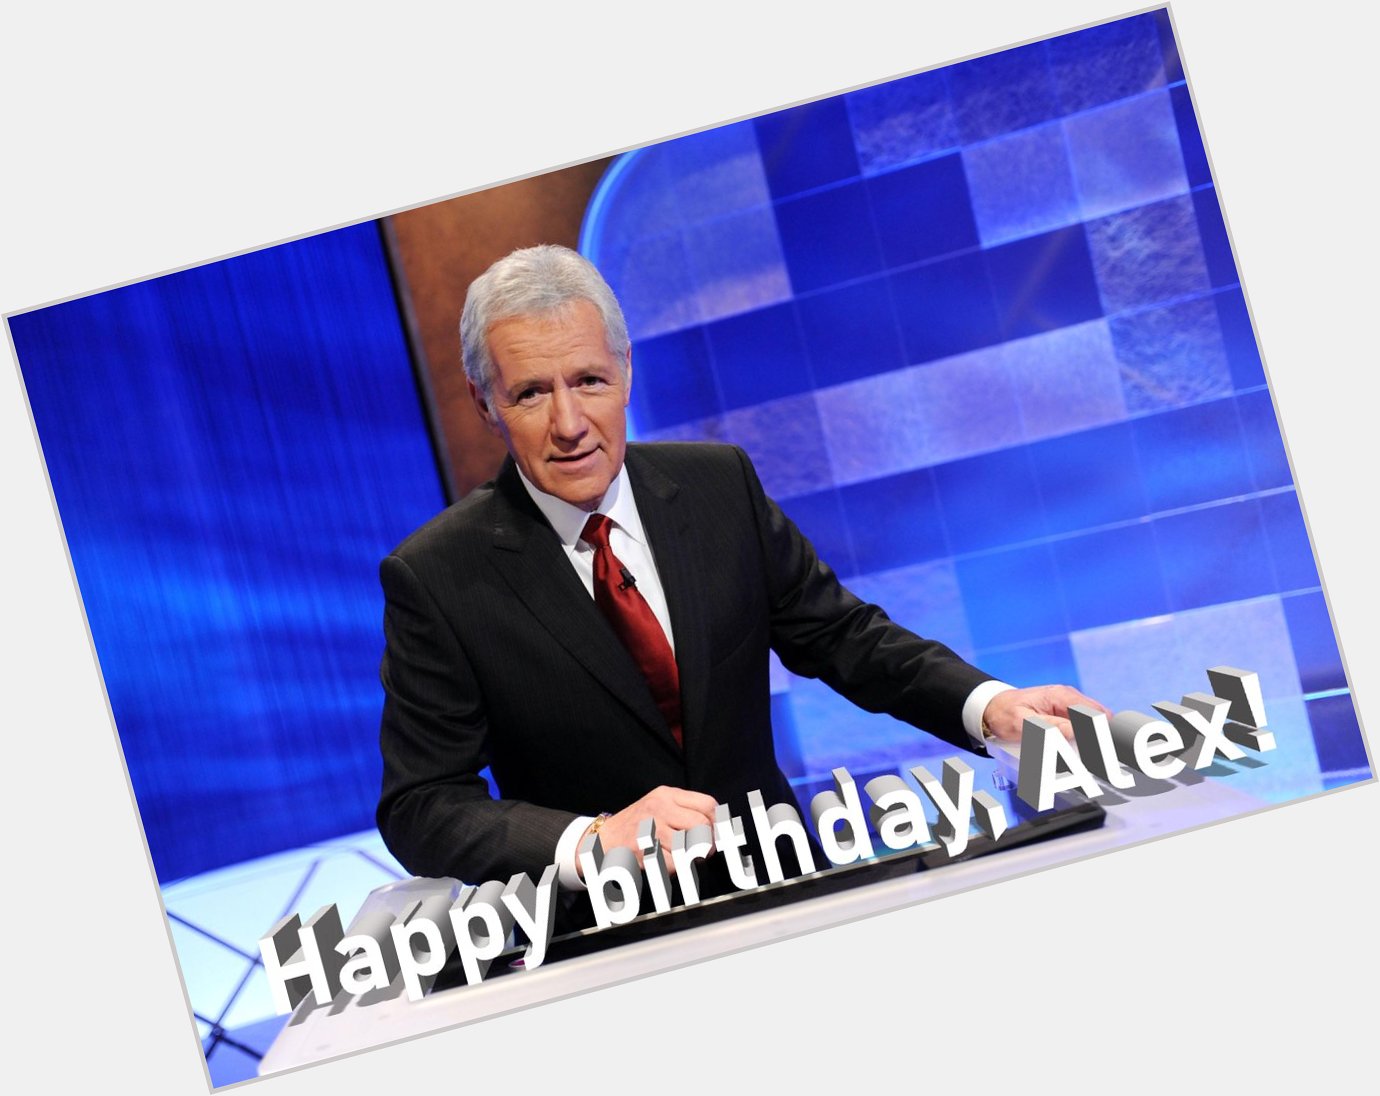 Happy birthday, Alex Trebek! Watch Jeopardy here on News10 at 7 p.m. 